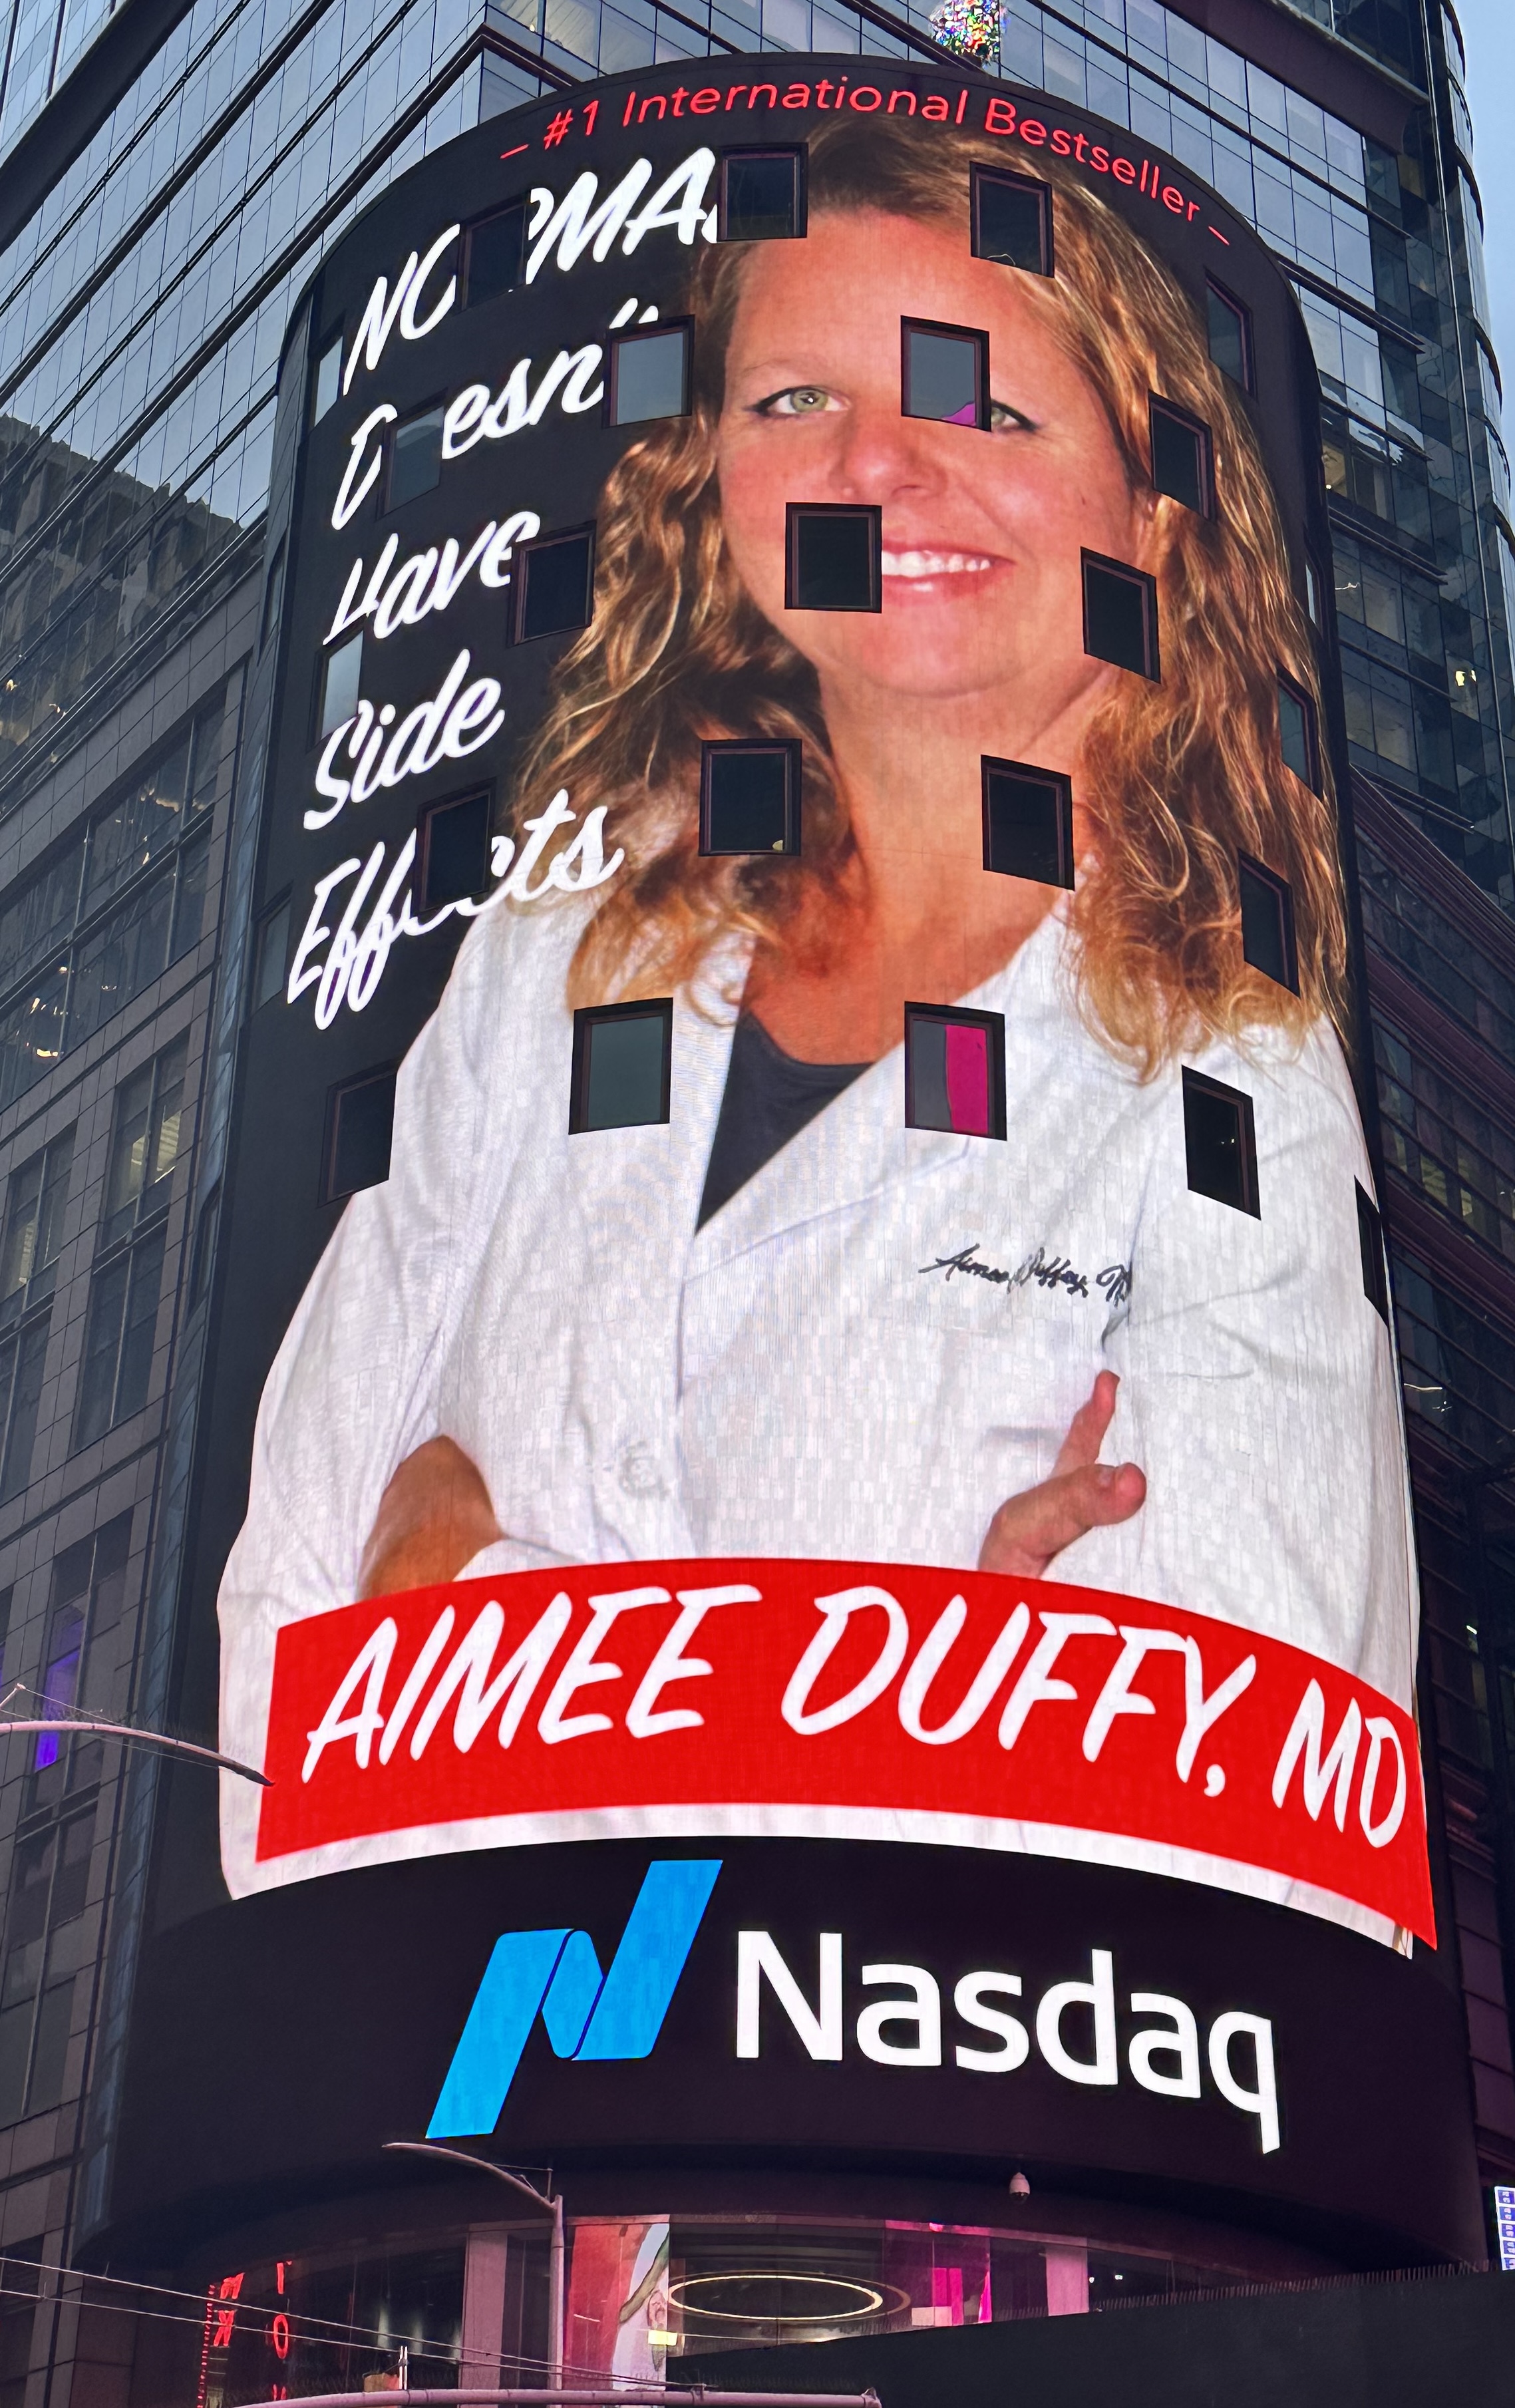 Carolina Integrative Medicine - Aimee, Duffy MD